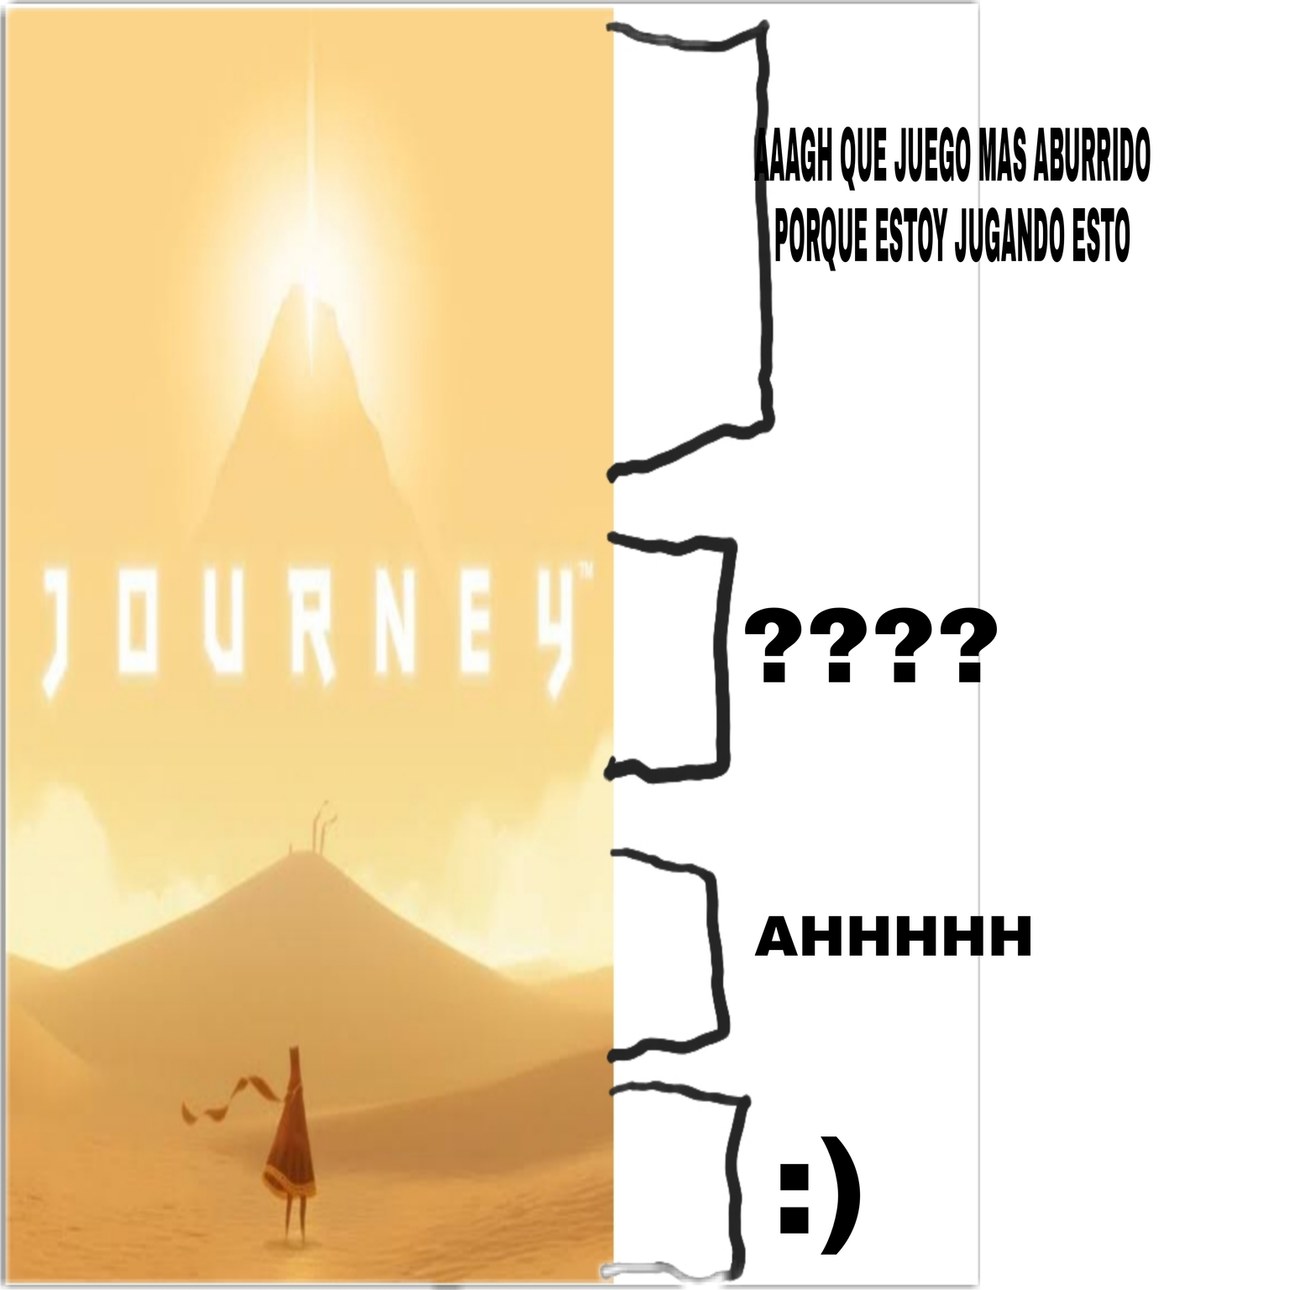 Segundo meme de journey